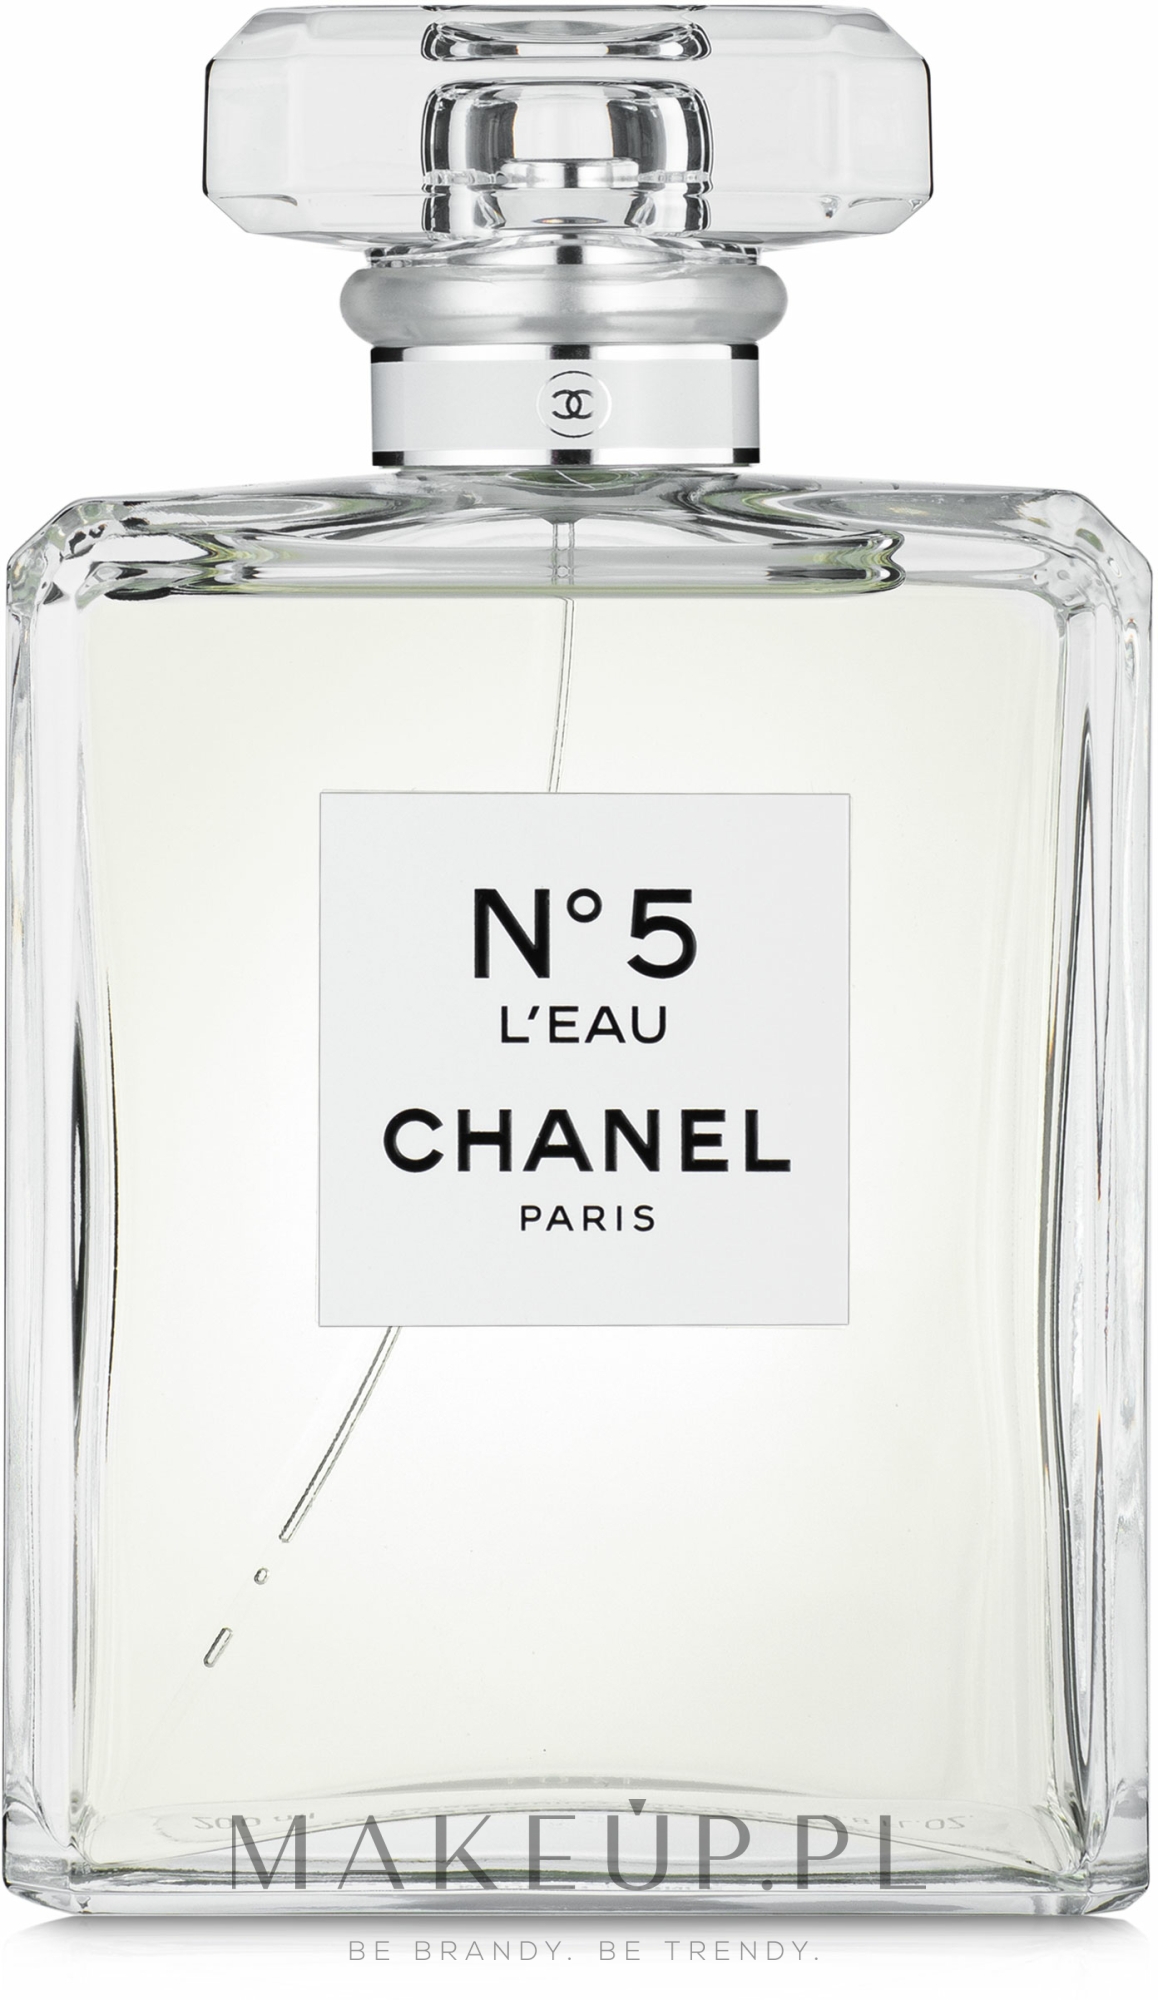 Chanel N°5 L'Eau - Woda toaletowa | Makeup.pl